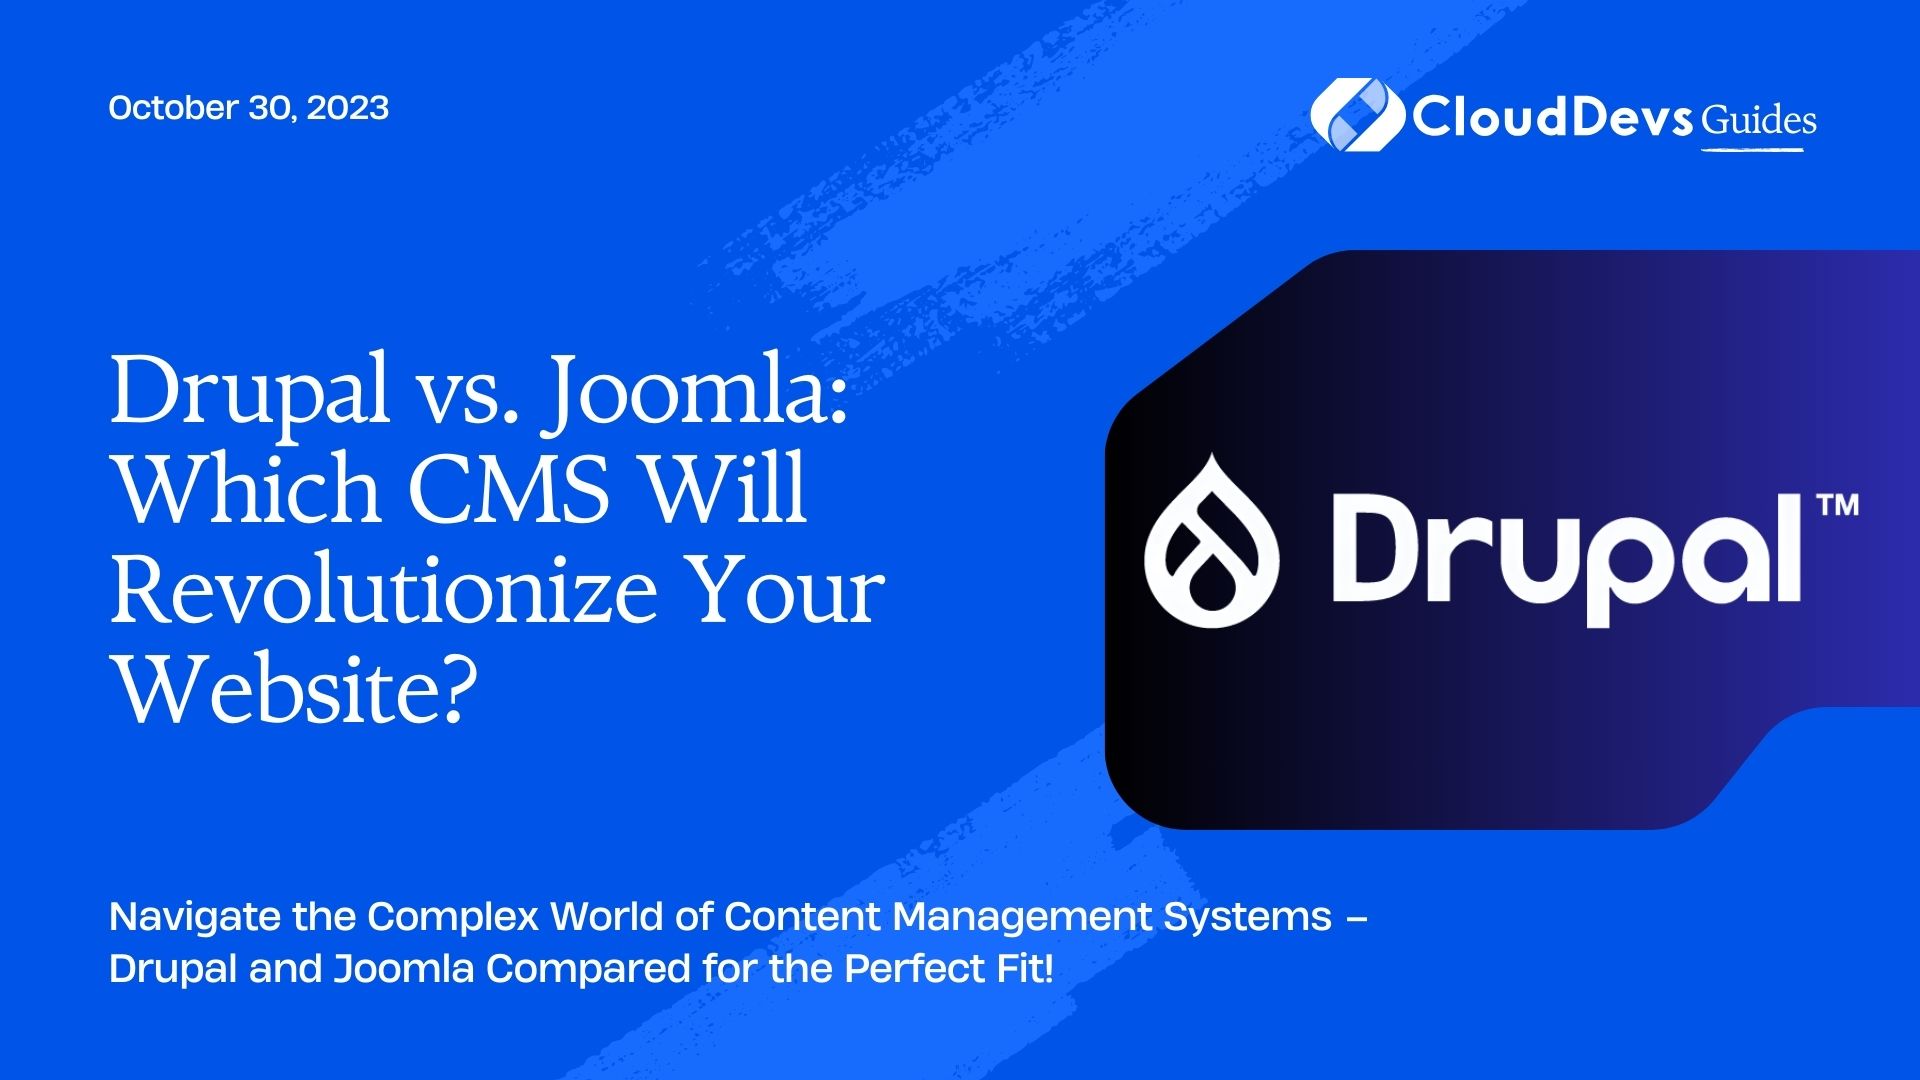 Drupal vs. Joomla: Which CMS Will Revolutionize Your Website?